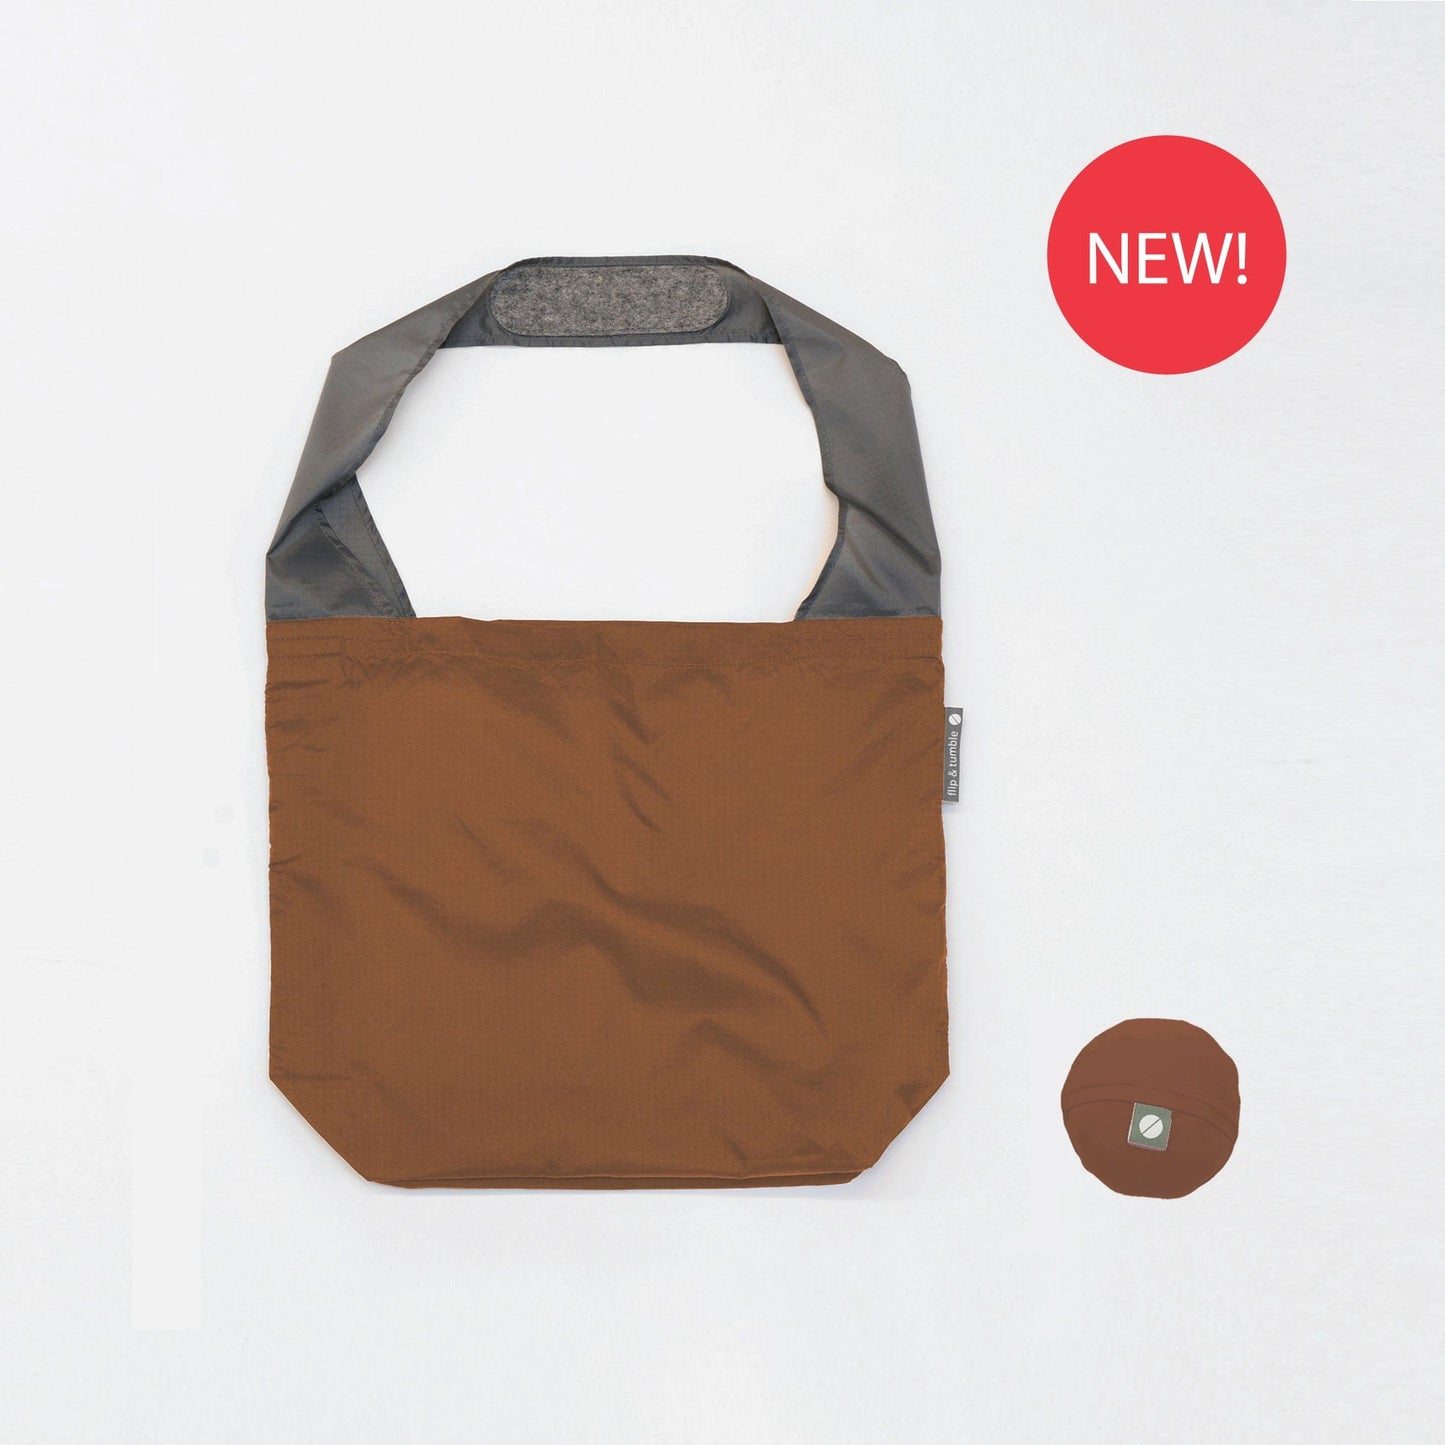 24-7 bag - flip & tumble - packable tote, stylish reusable bag, great with reusable mesh bags